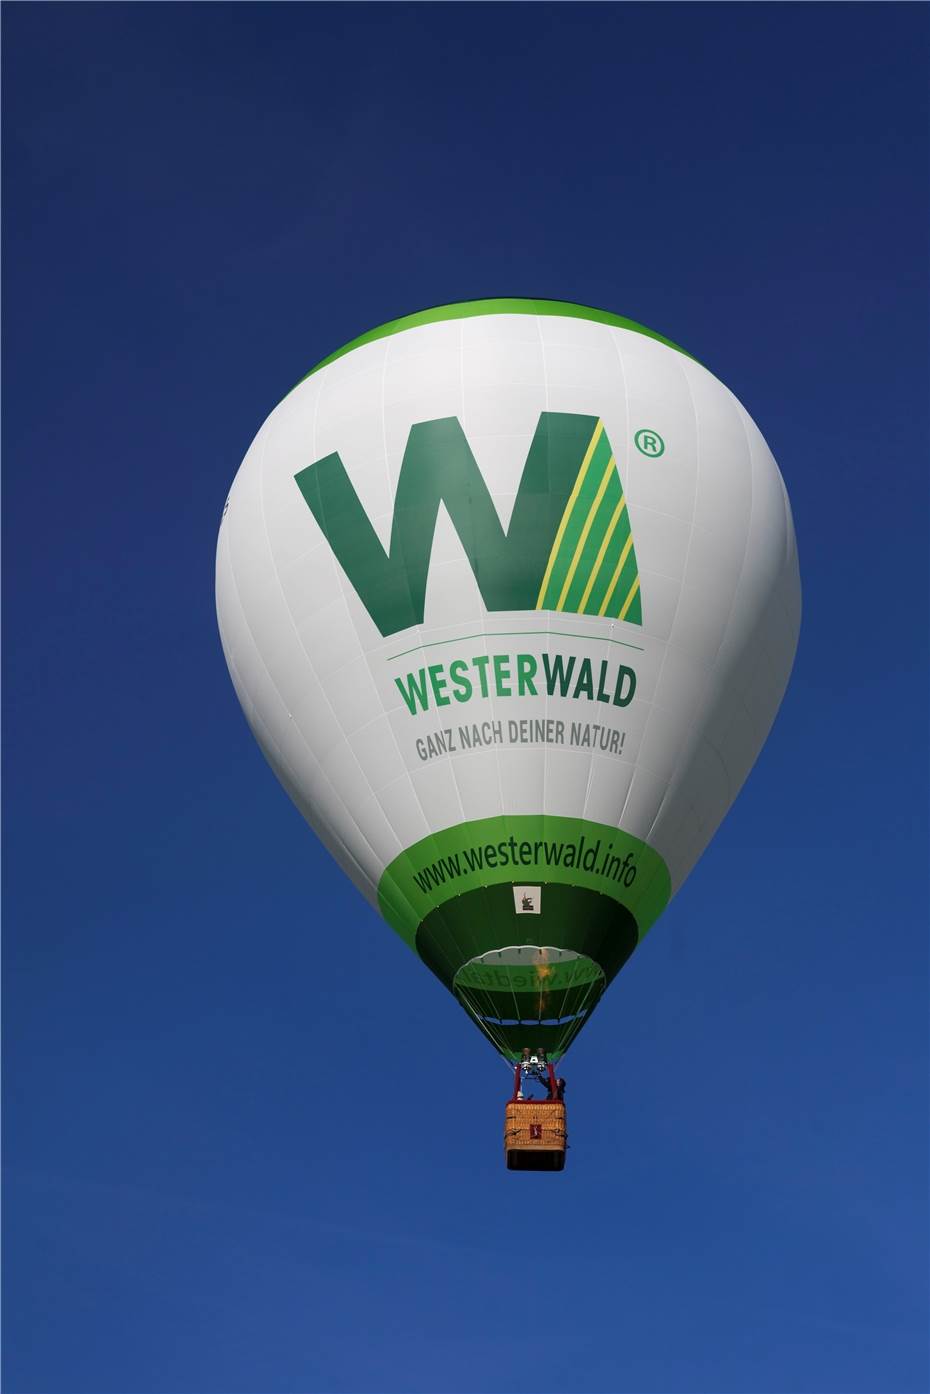 Heißluftballon
Westerwald-Wiedtal hebt ab